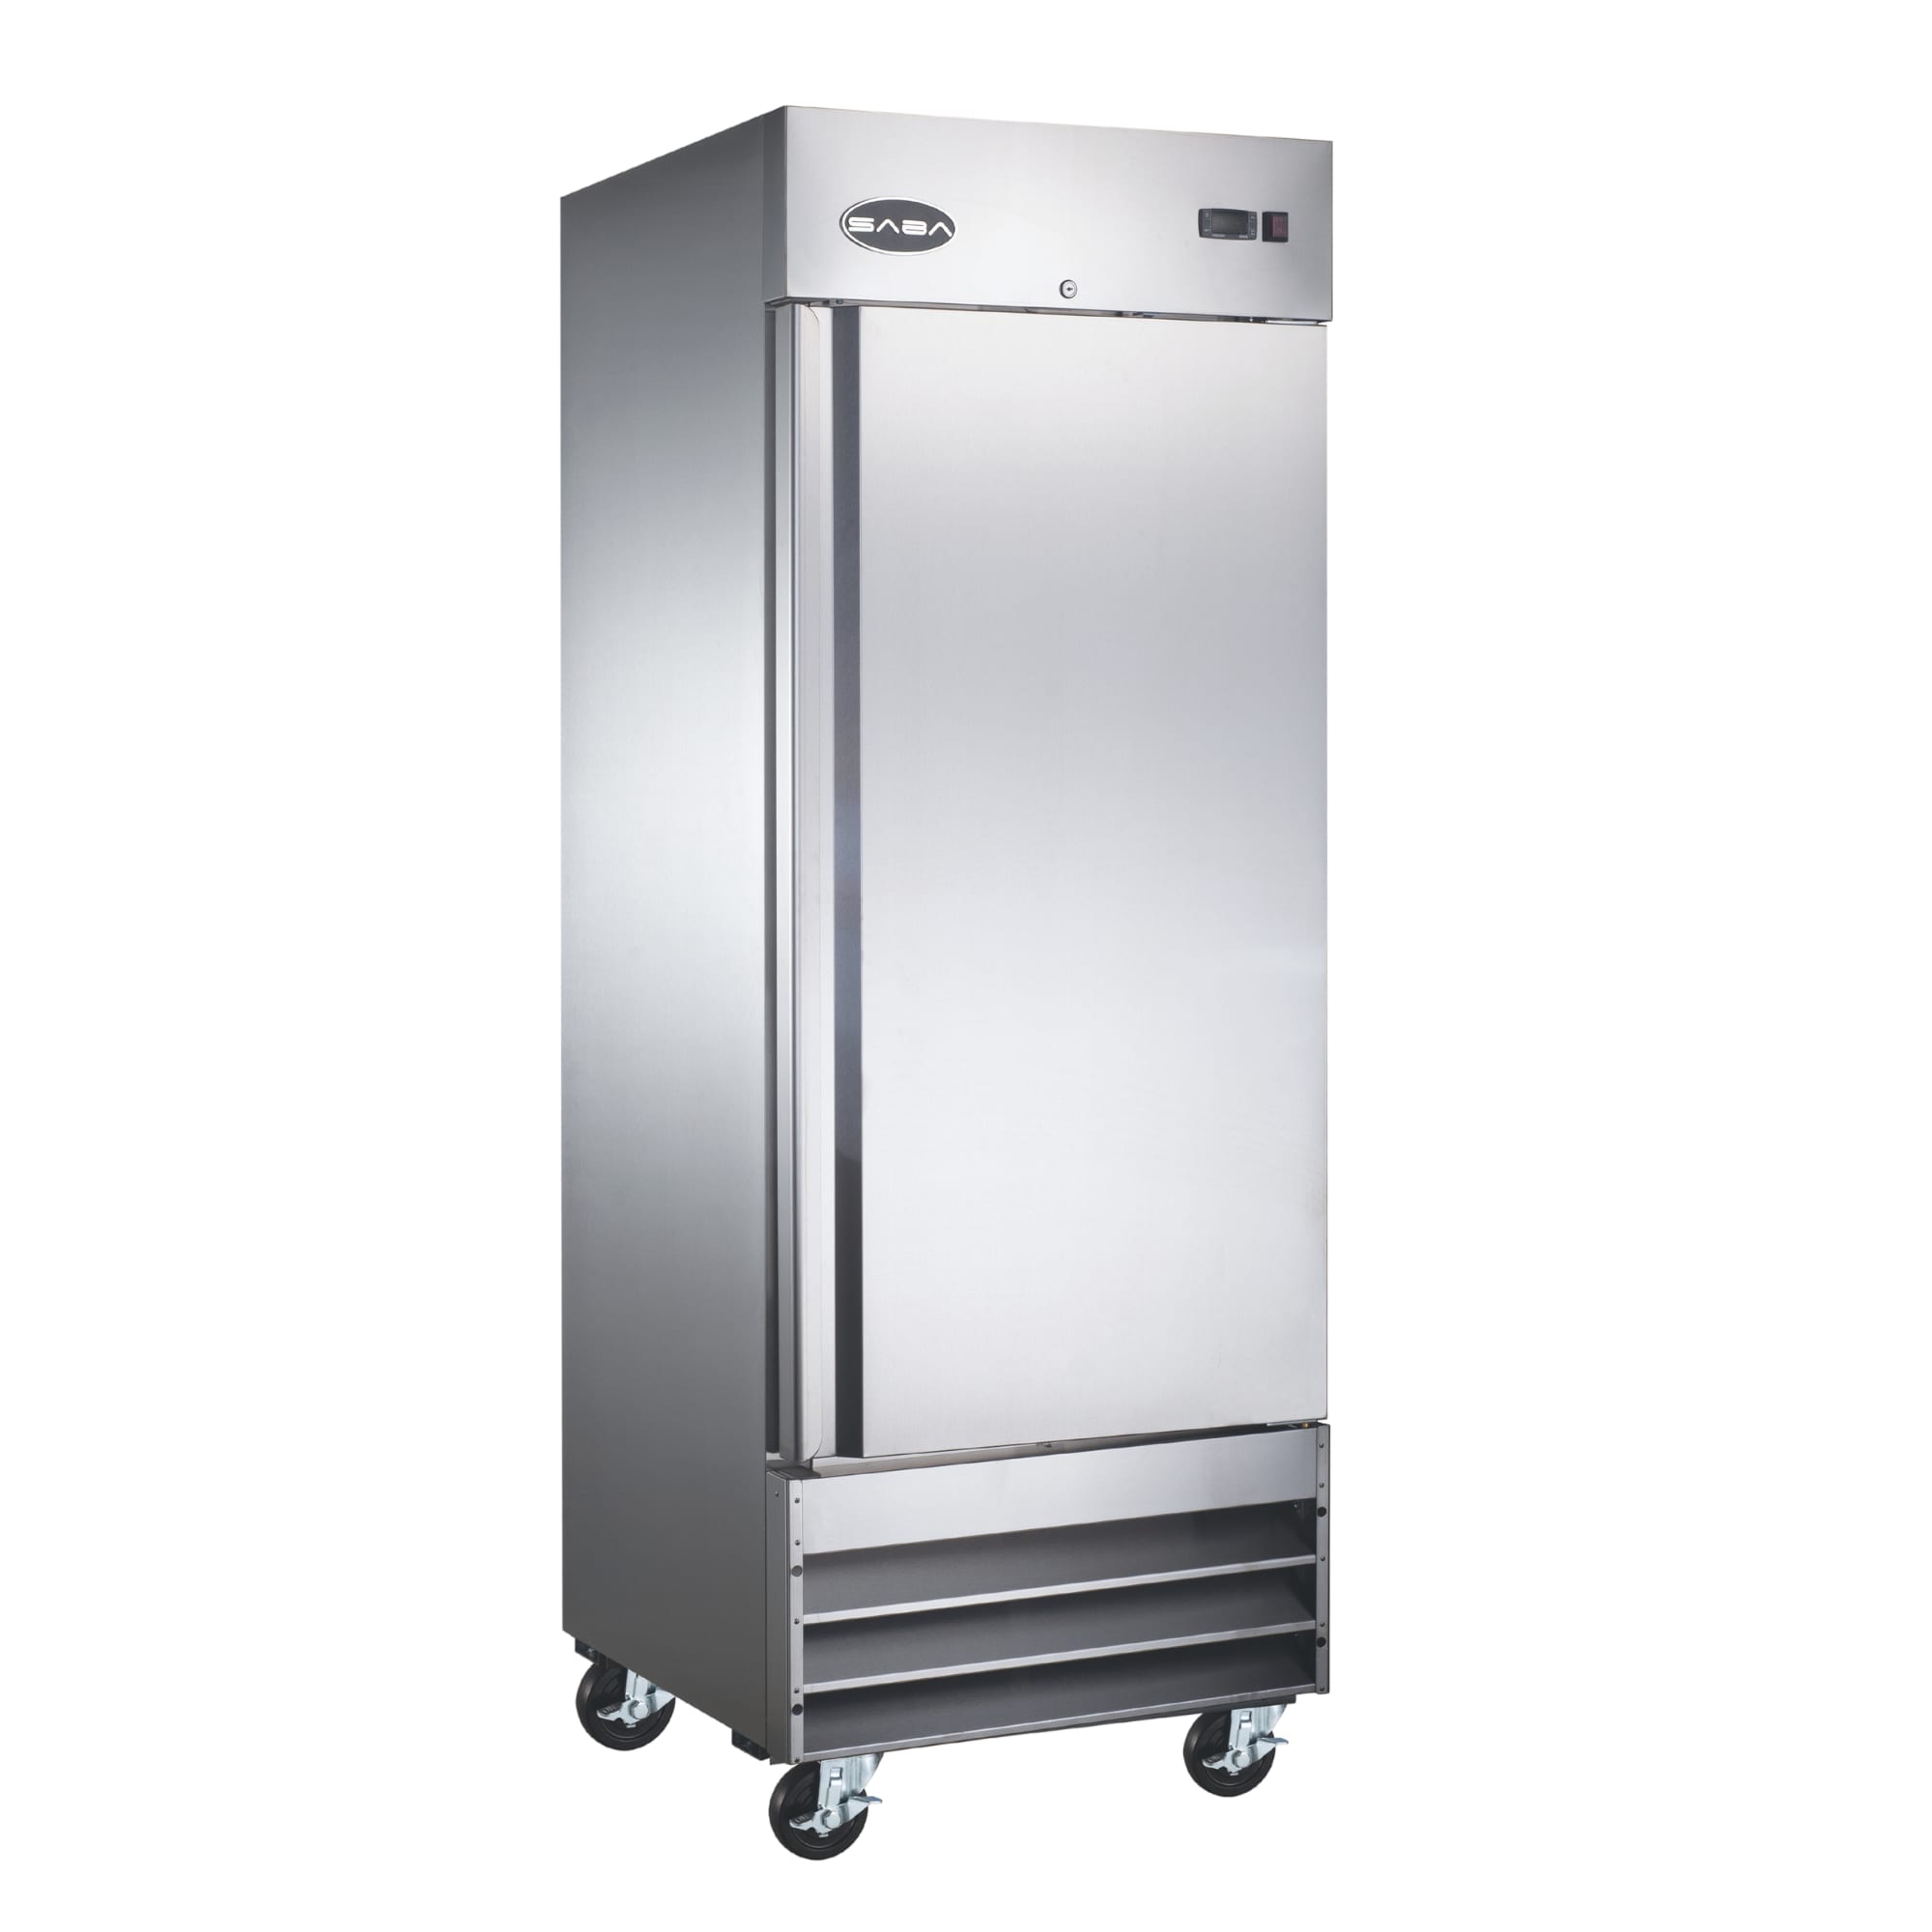 Freezerless Refrigerators - Fridges 